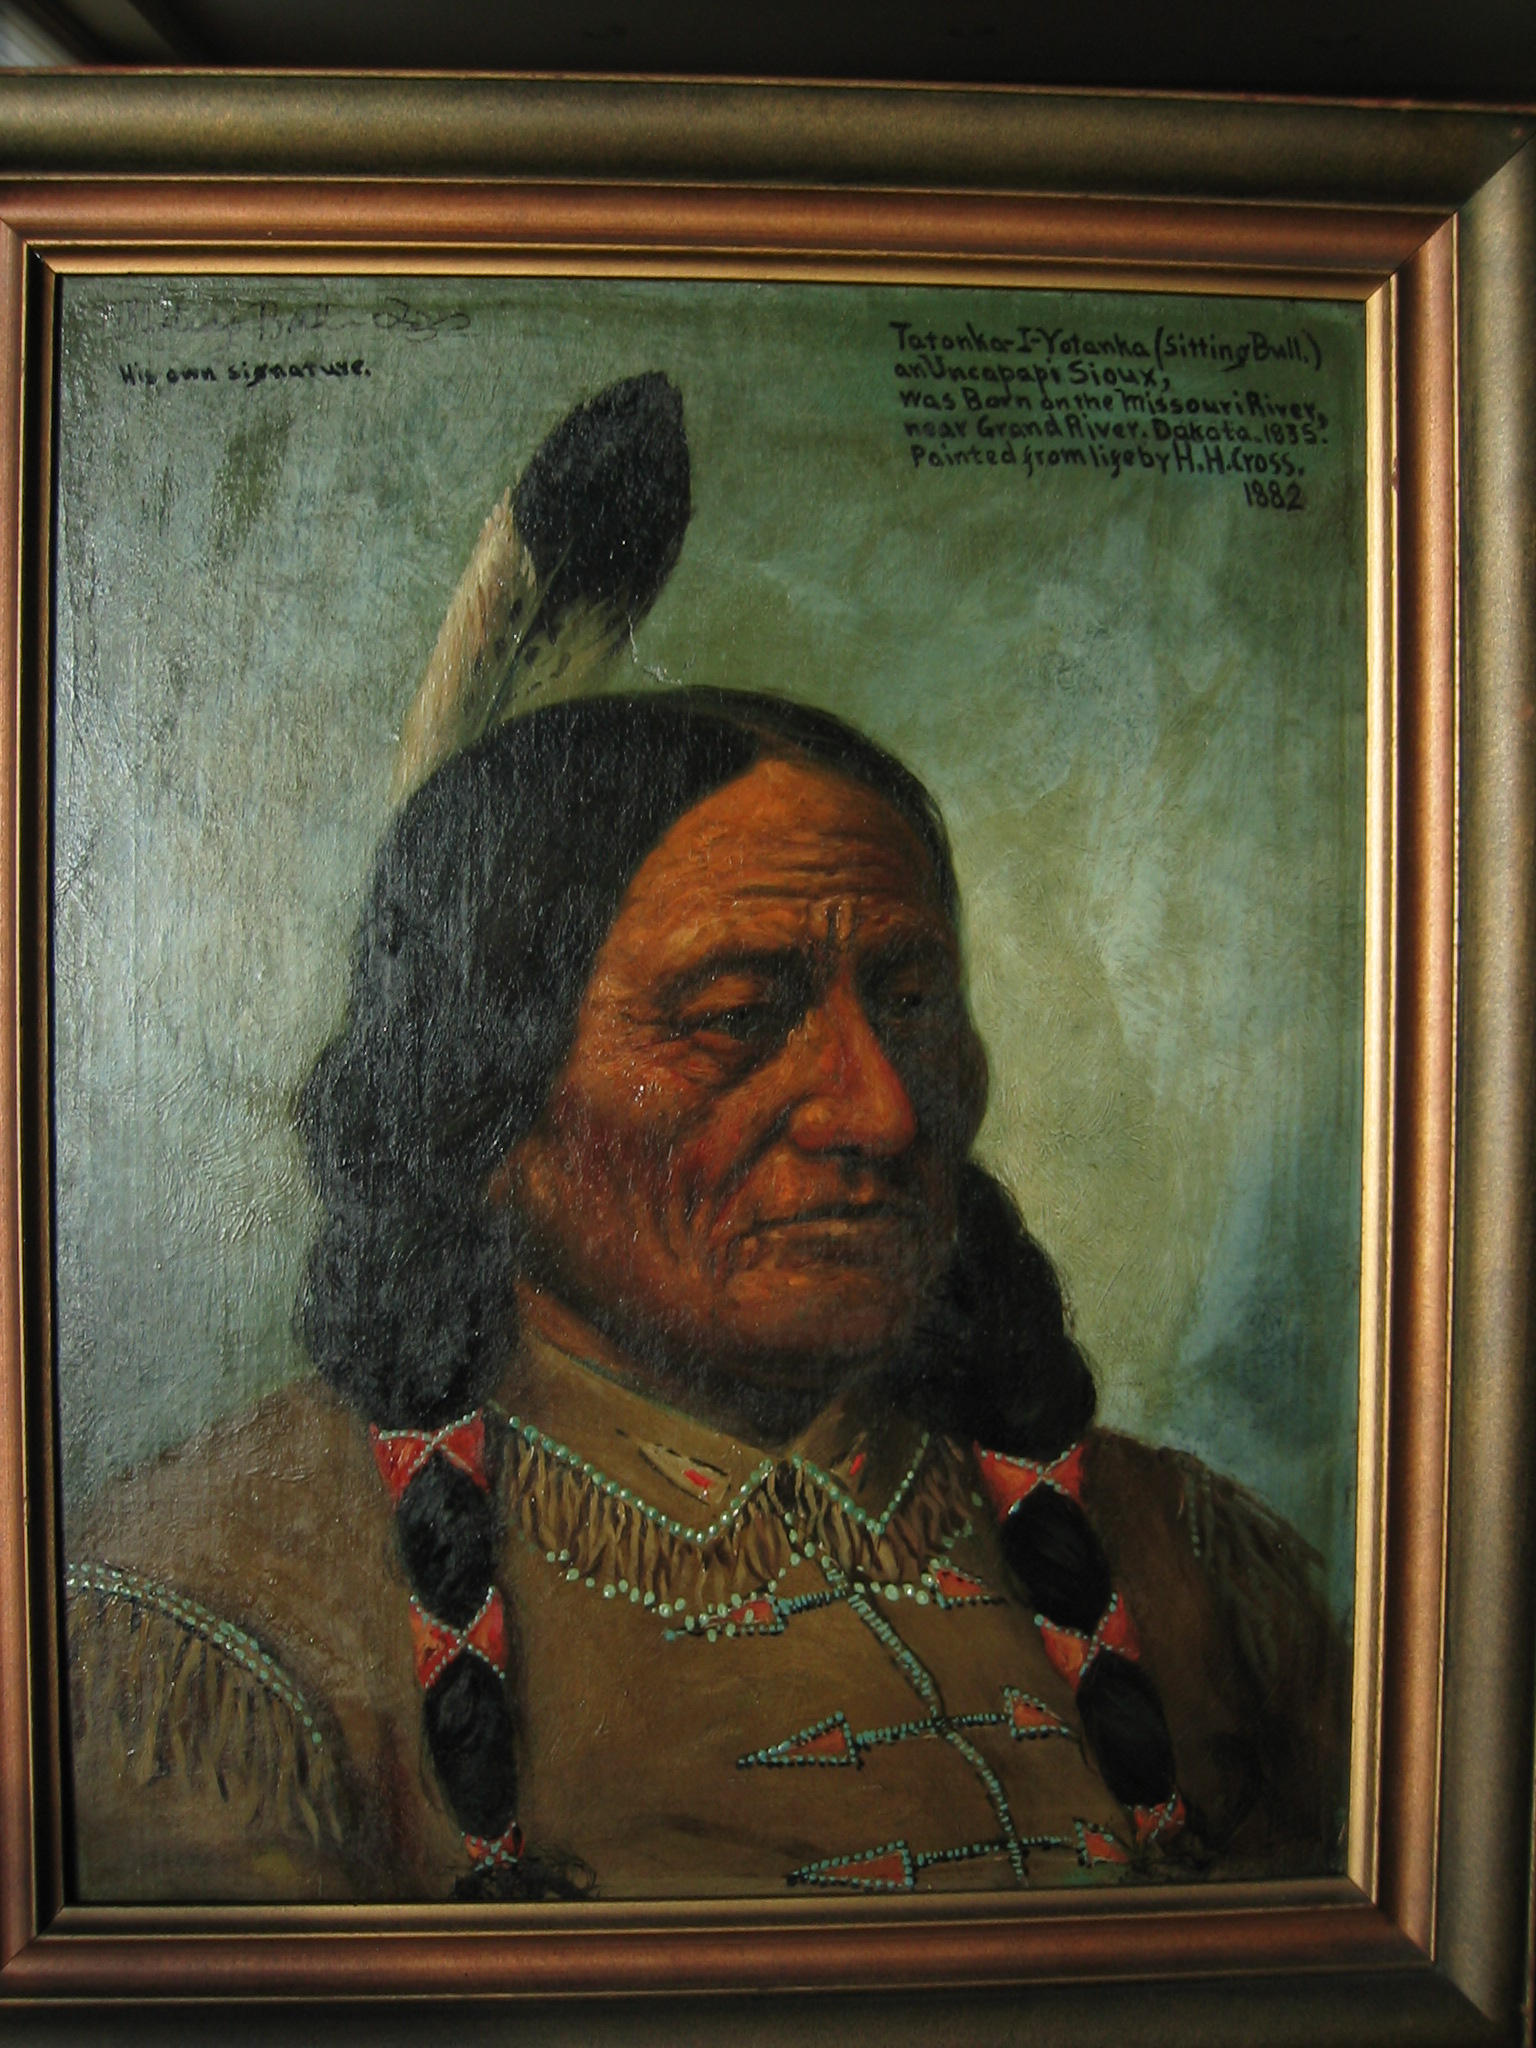 http://www.american-tribes.com/messageboards/dietmar/SittingBullarmor006.jpg